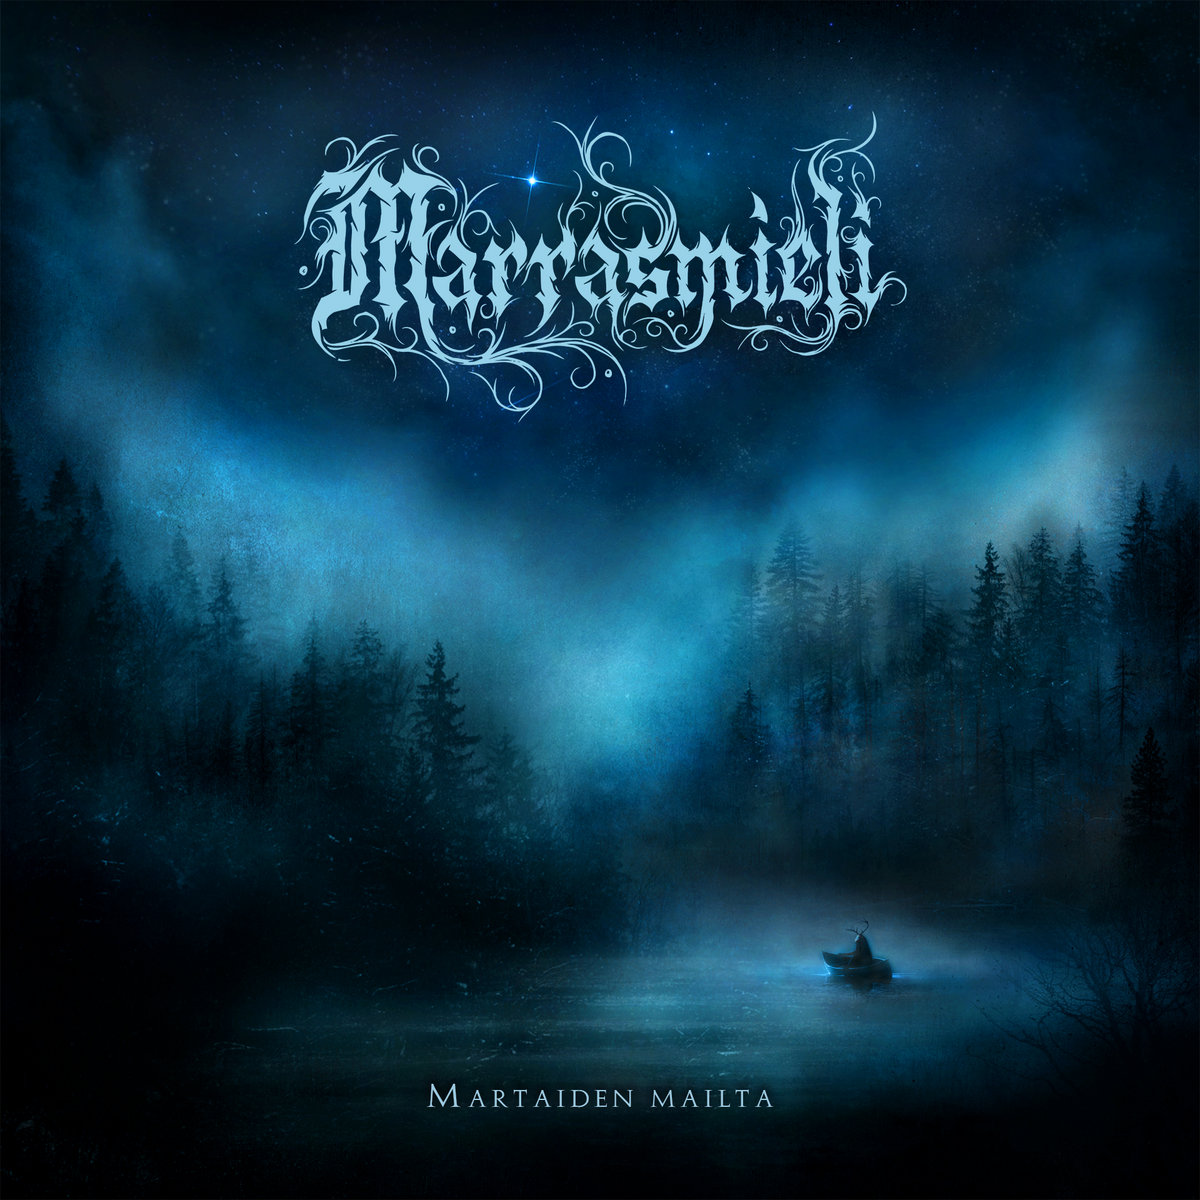 Marrasmieli — Martaiden Mailta cover artwork